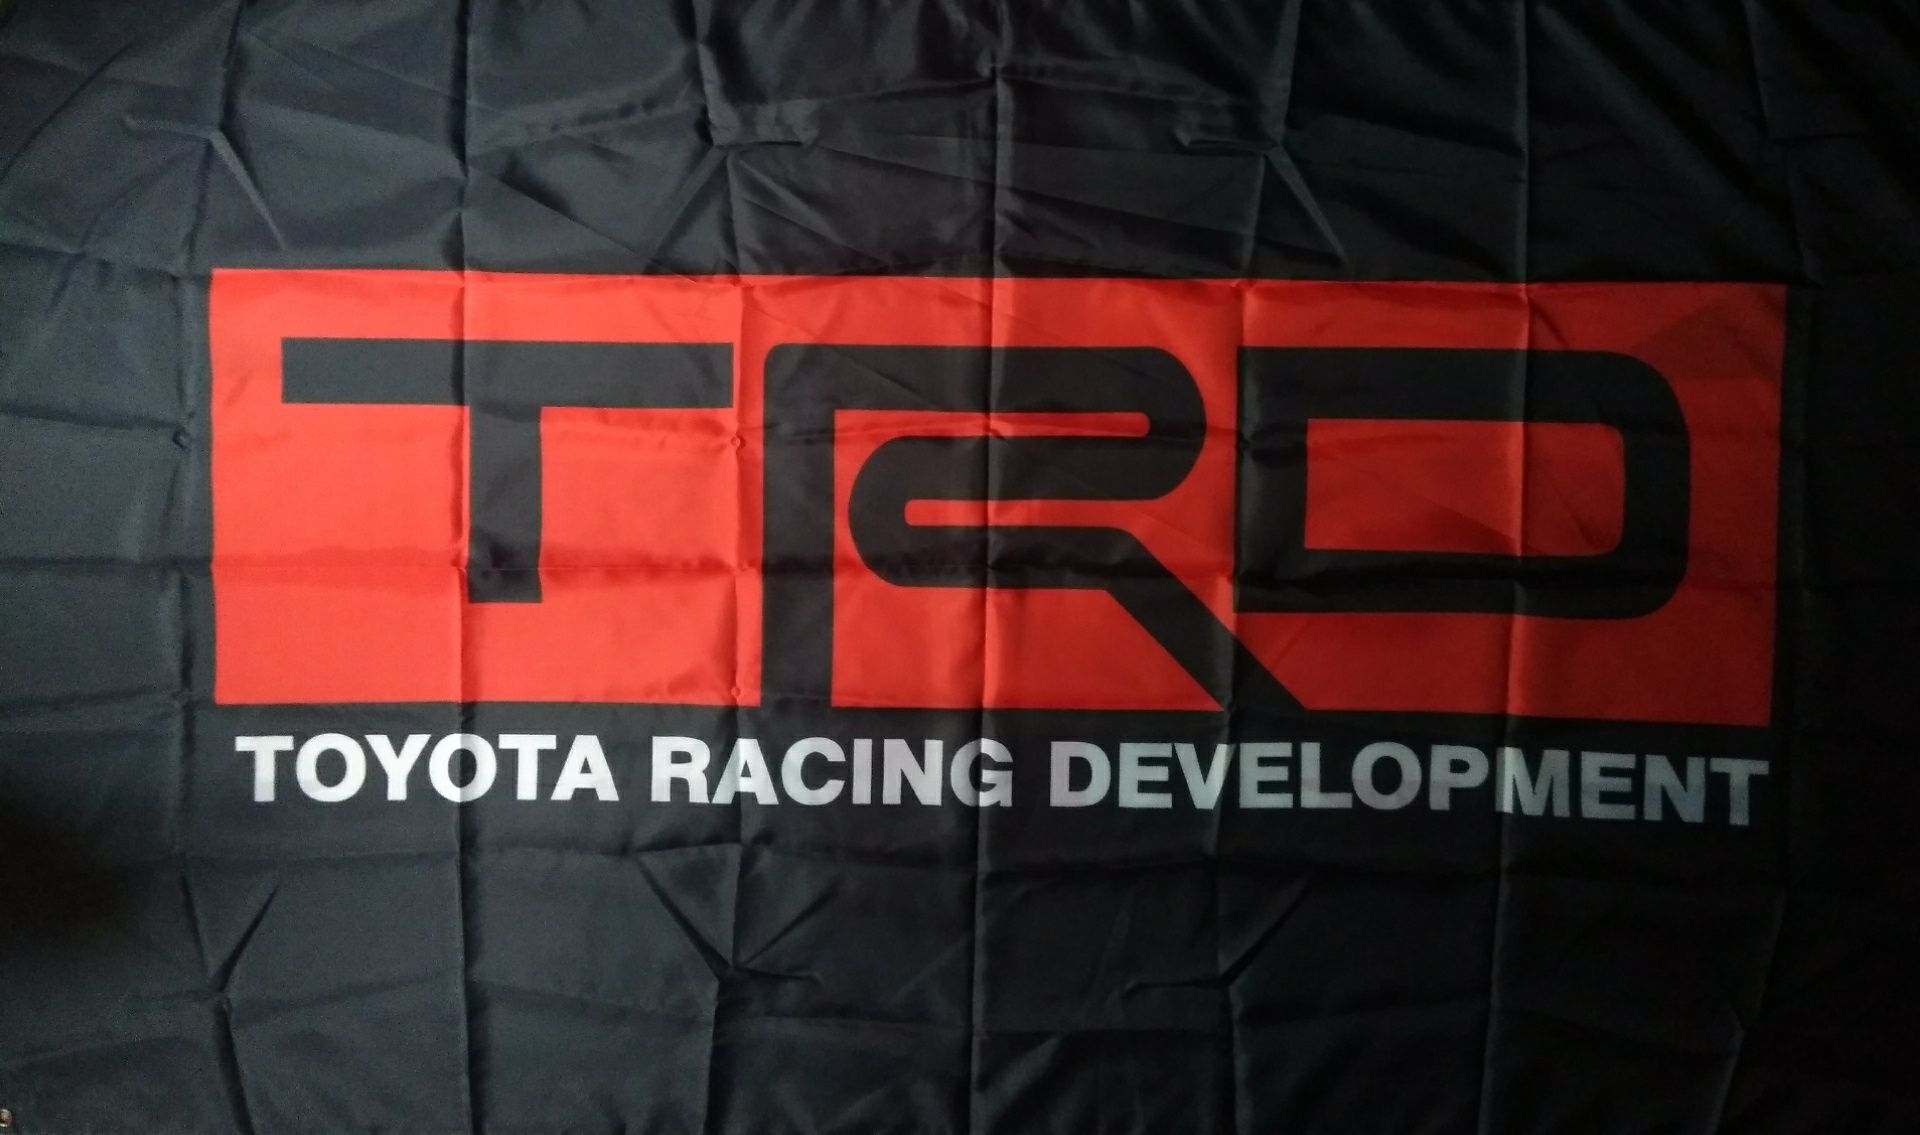 Bandeira Toyota racing development